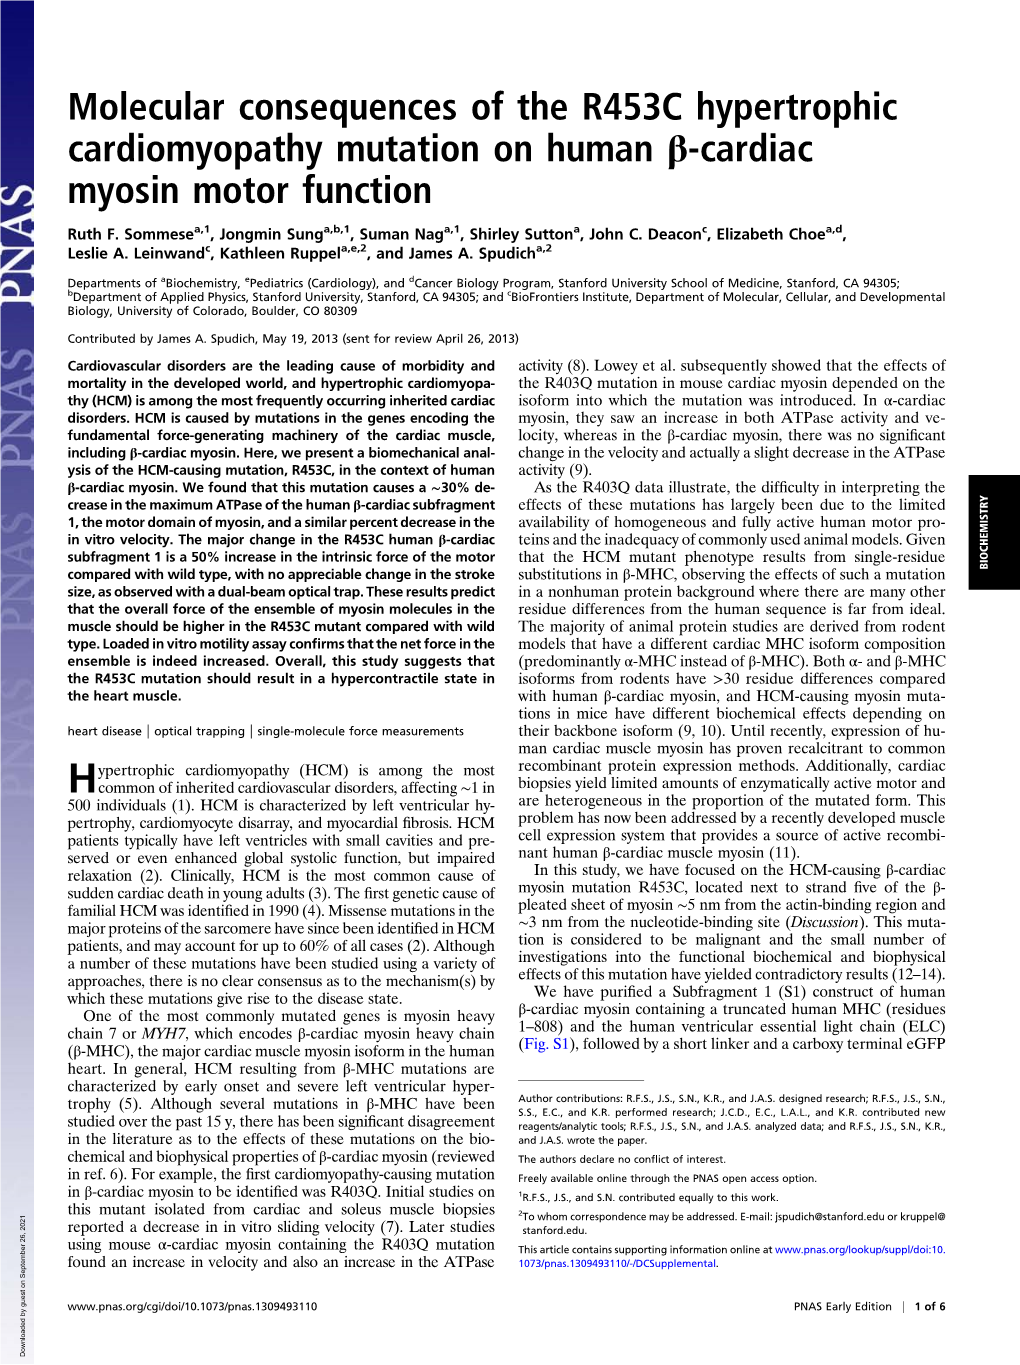 Molecular Consequences of the R453C Hypertrophic Cardiomyopathy Mutation on Human Β-Cardiac Myosin Motor Function